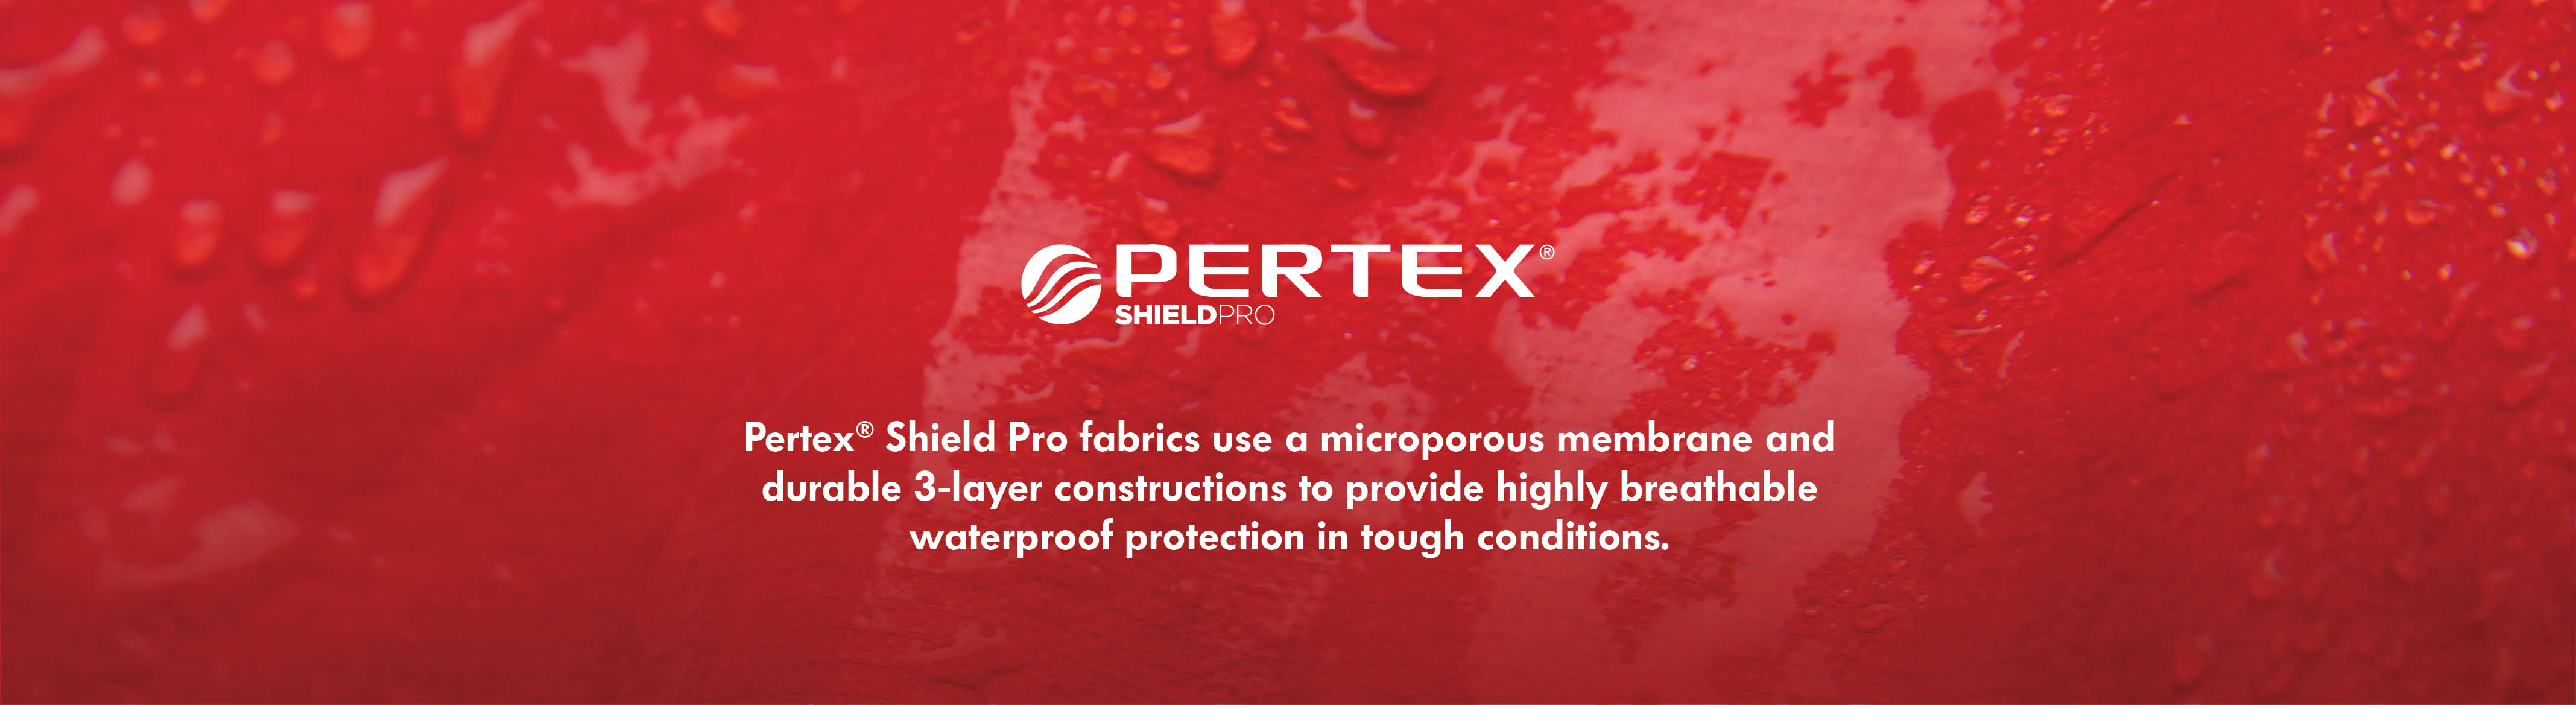 Pertex Shield Pro